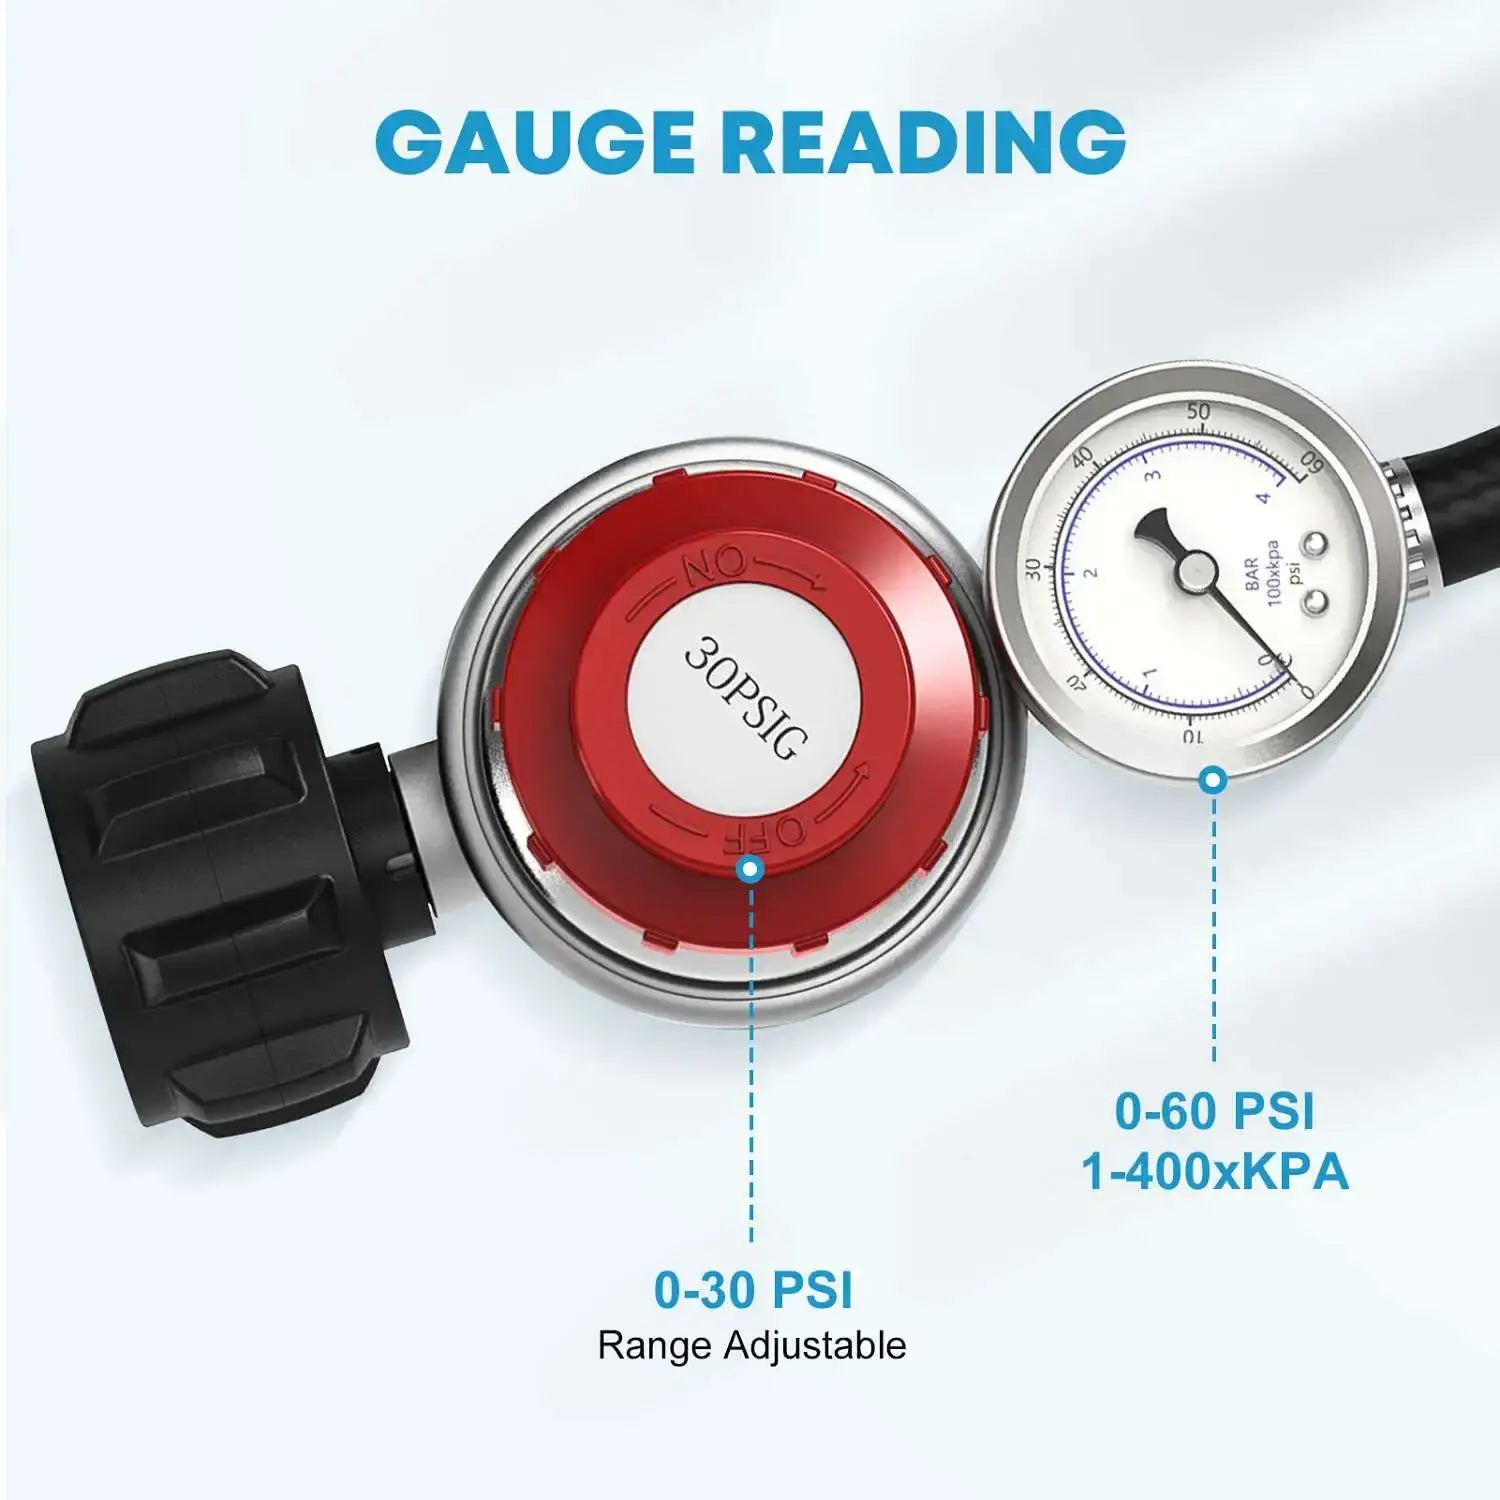 4 ft propane gas regulator gauge reading